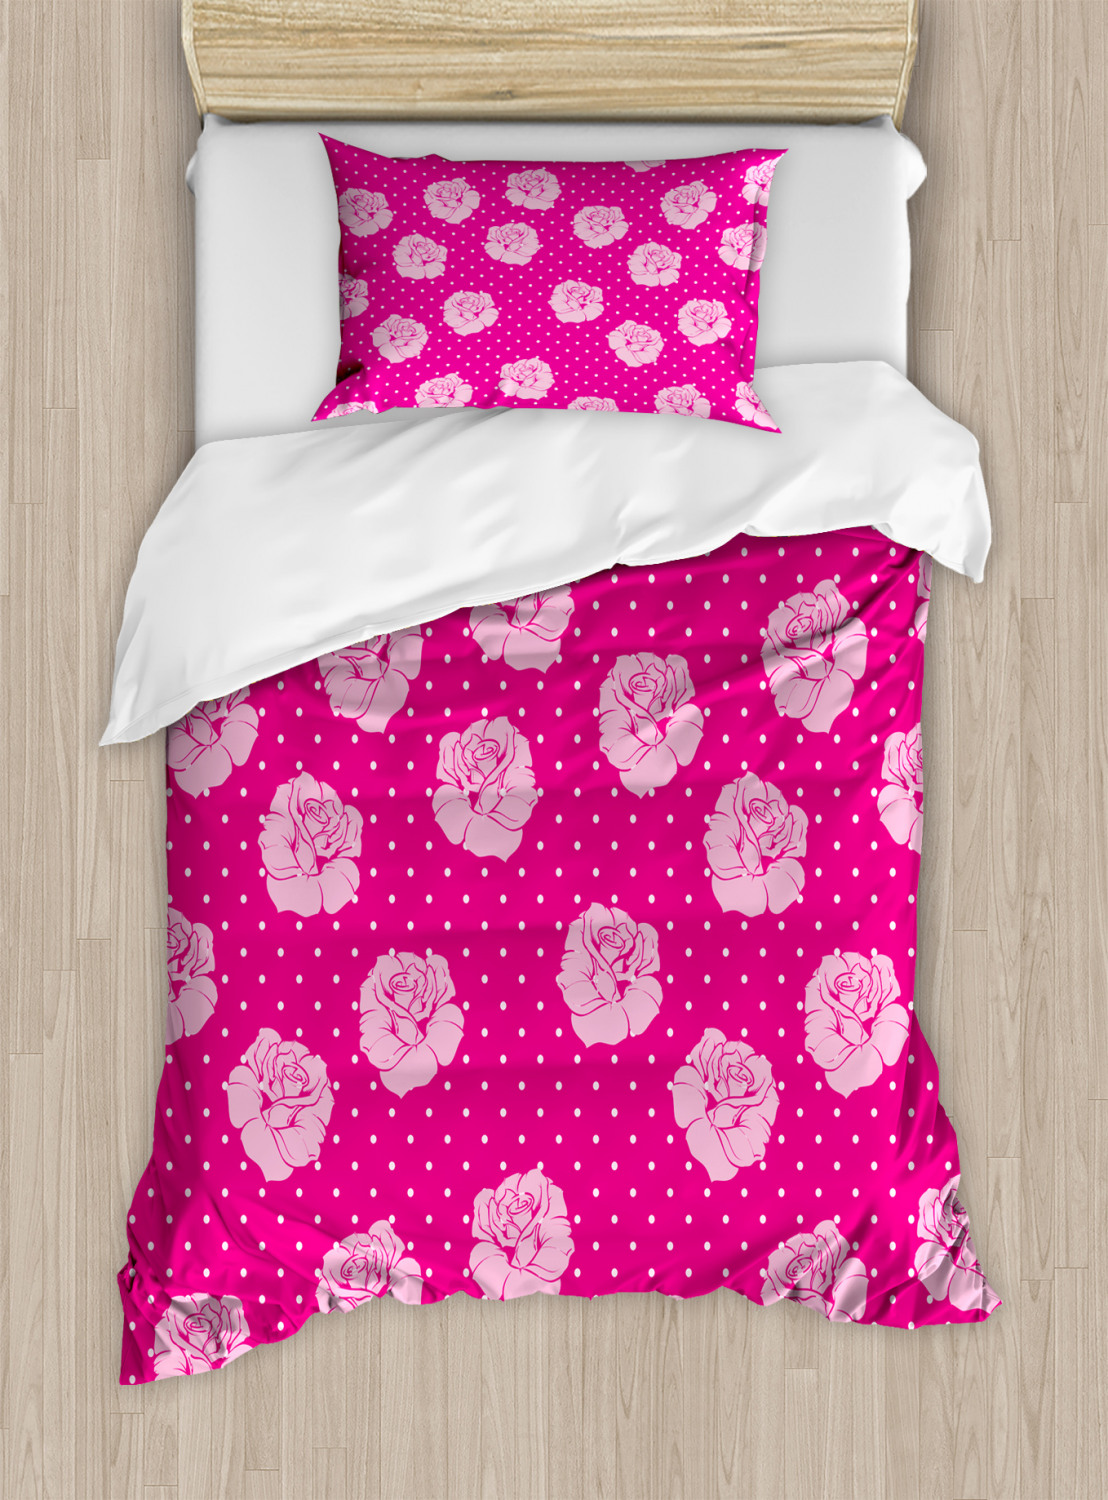 Details about   3D Pink Red zhuc 3245 Bed Pillowcases Quilt Duvet Cover Set show original title 